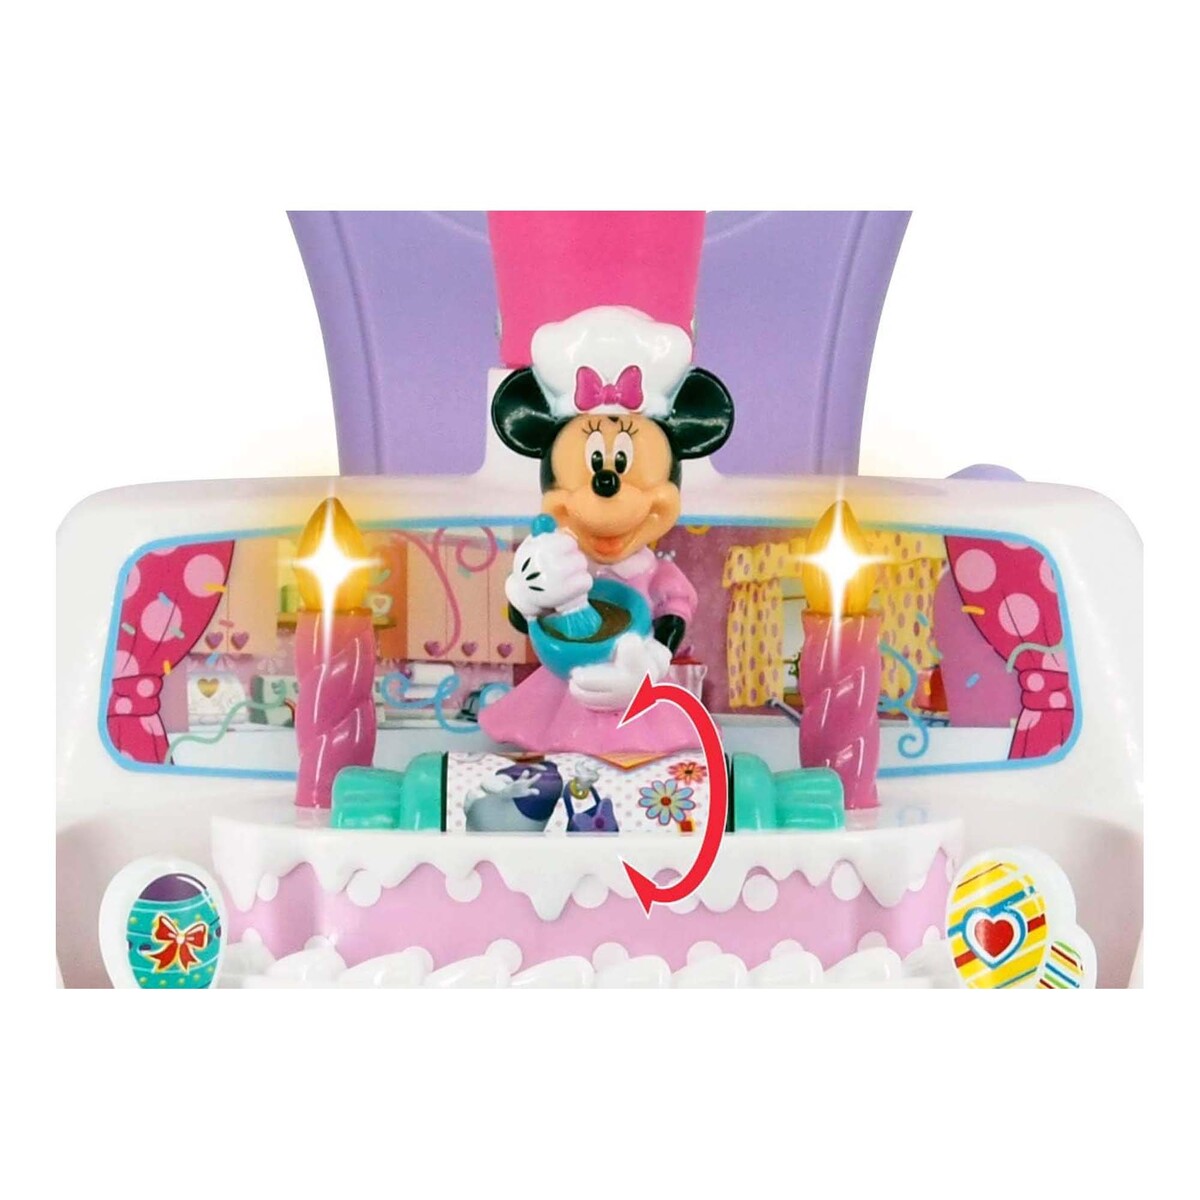 Kiddie Land Disney Lights n Sounds Partytime Ride-On, 061176